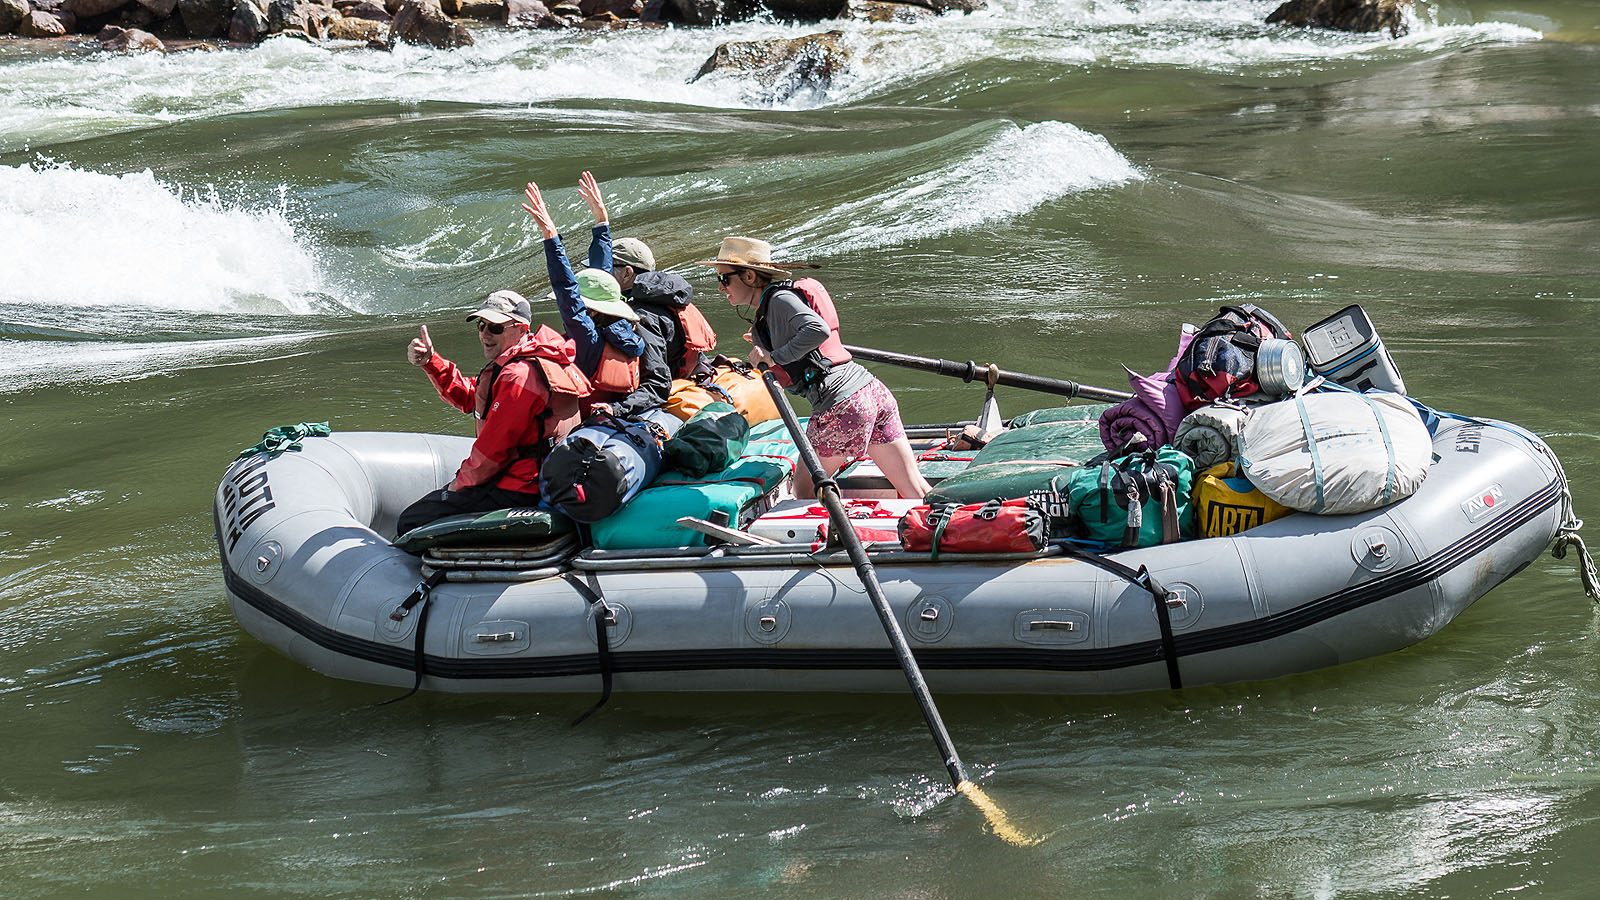 An oar raft enters Black Canyon Rapid on the Main Salmon River in Idaho